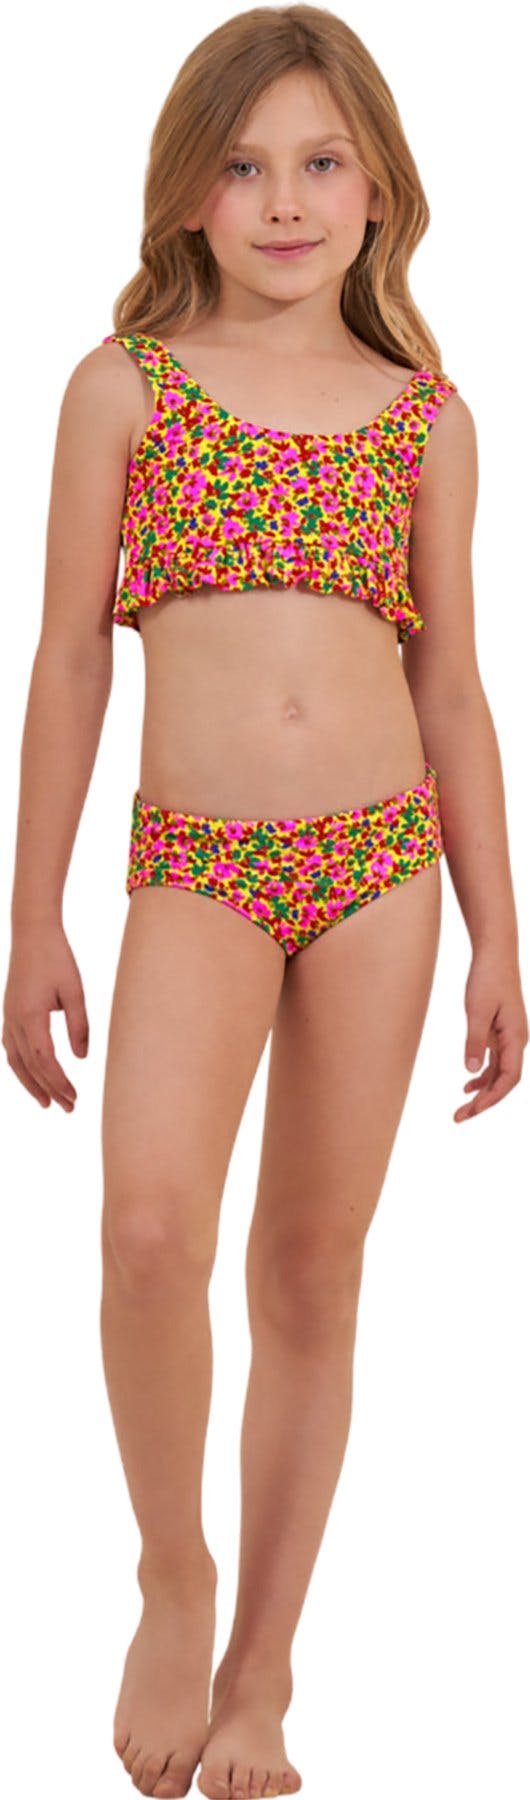 Product image for Moonbow Miniflore Bikini Set - Girls